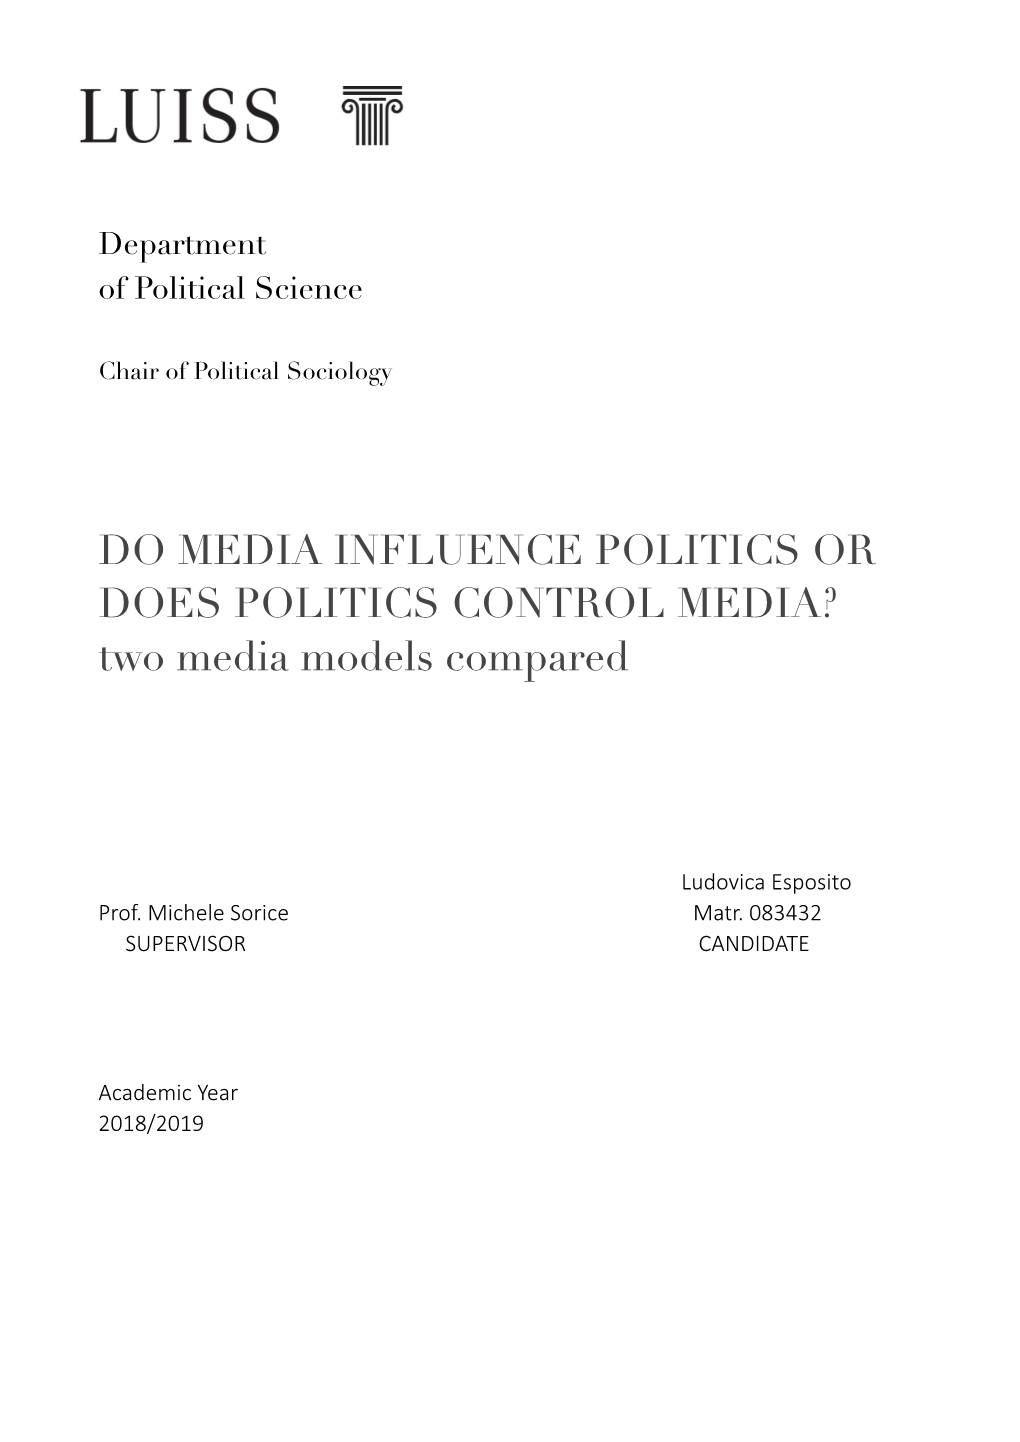 DO MEDIA INFLUENCE POLITICS OR DOES POLITICS CONTROL MEDIA? Two Media Models Compared